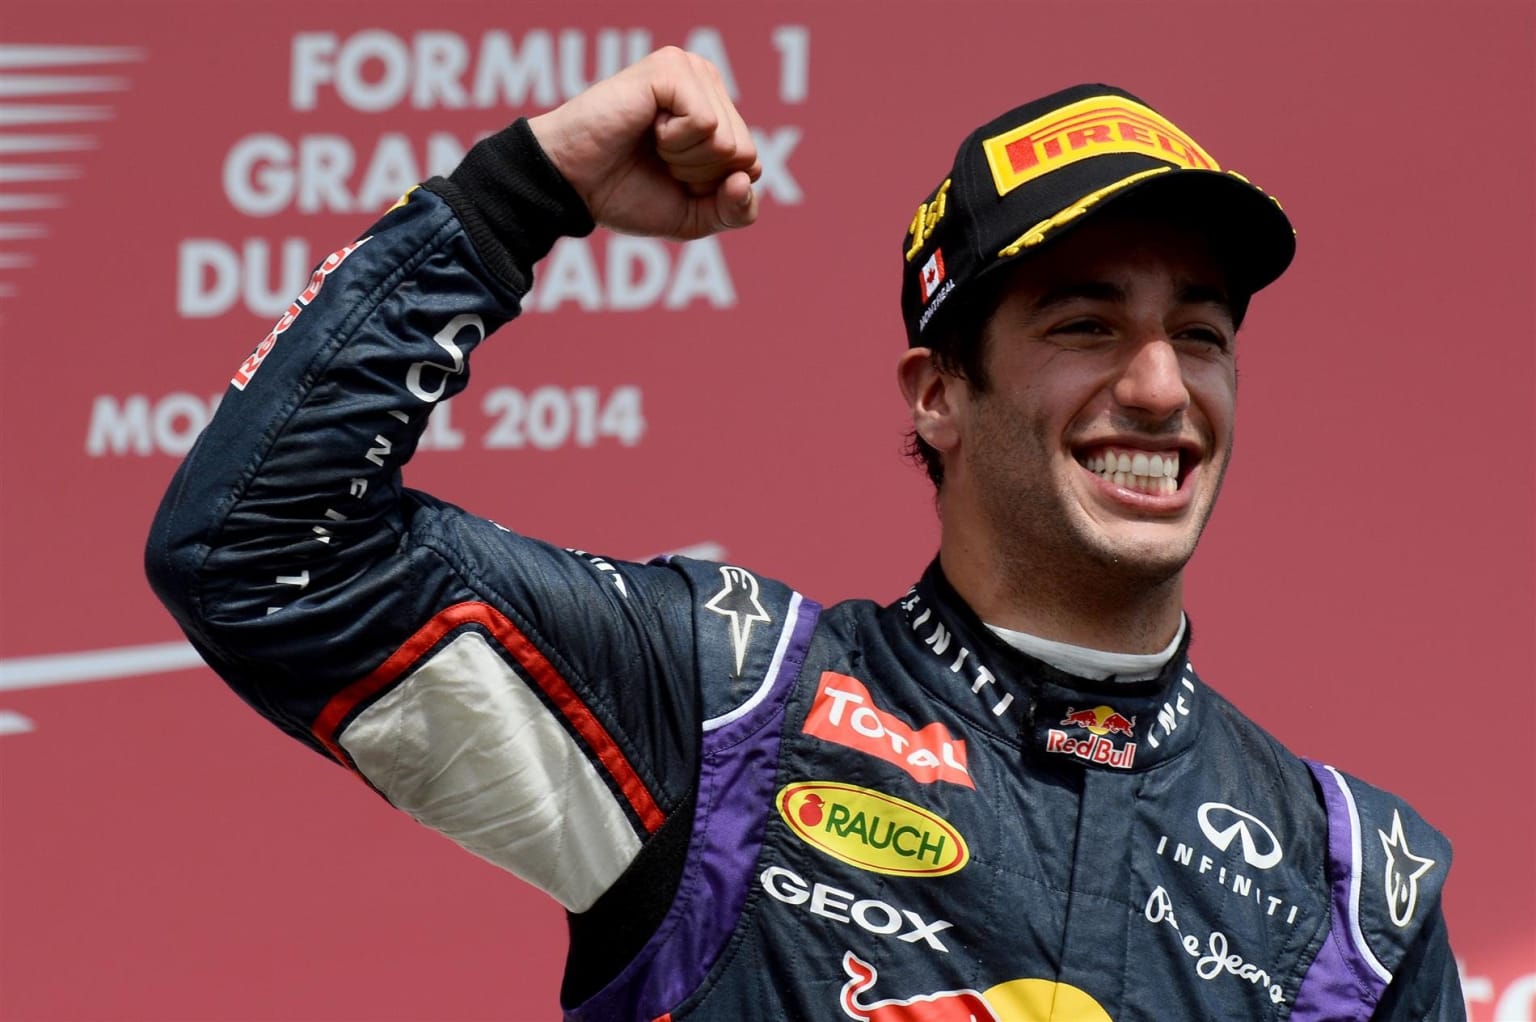 Race - Ricciardo claims maiden win in Montreal thriller